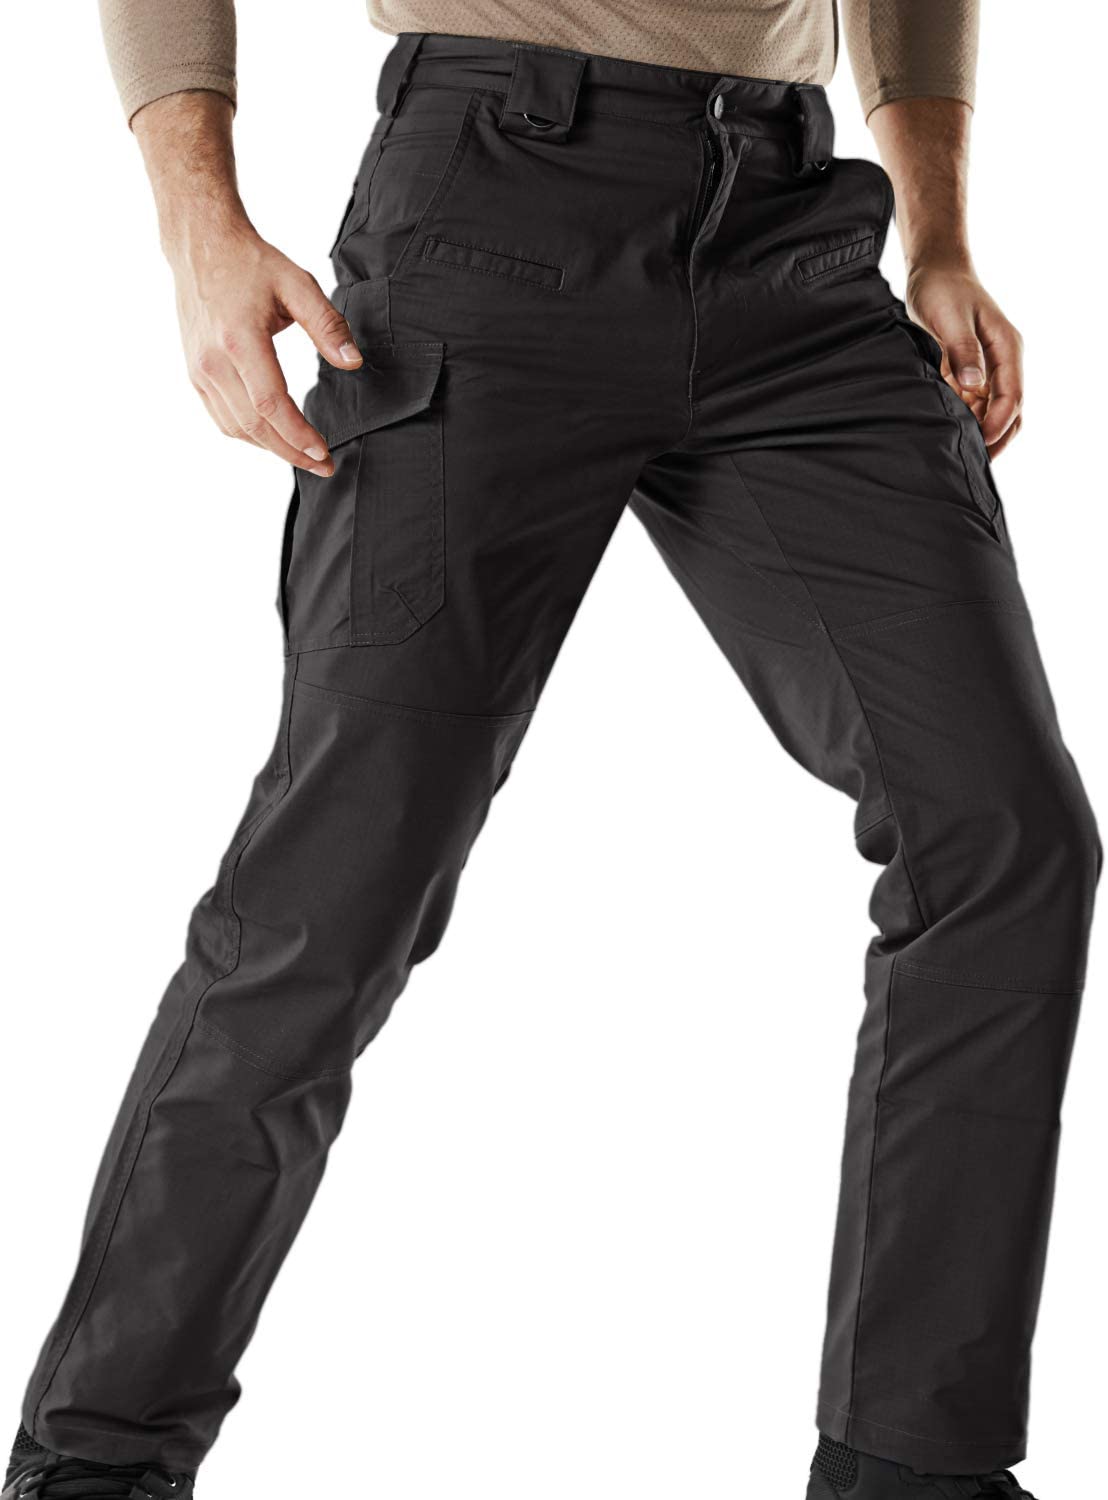 Water Resistant Stretch Cargo Pants CQR Men's Flex Ripstop Tactical Pants Lightweight EDC Hiking Work Pants 